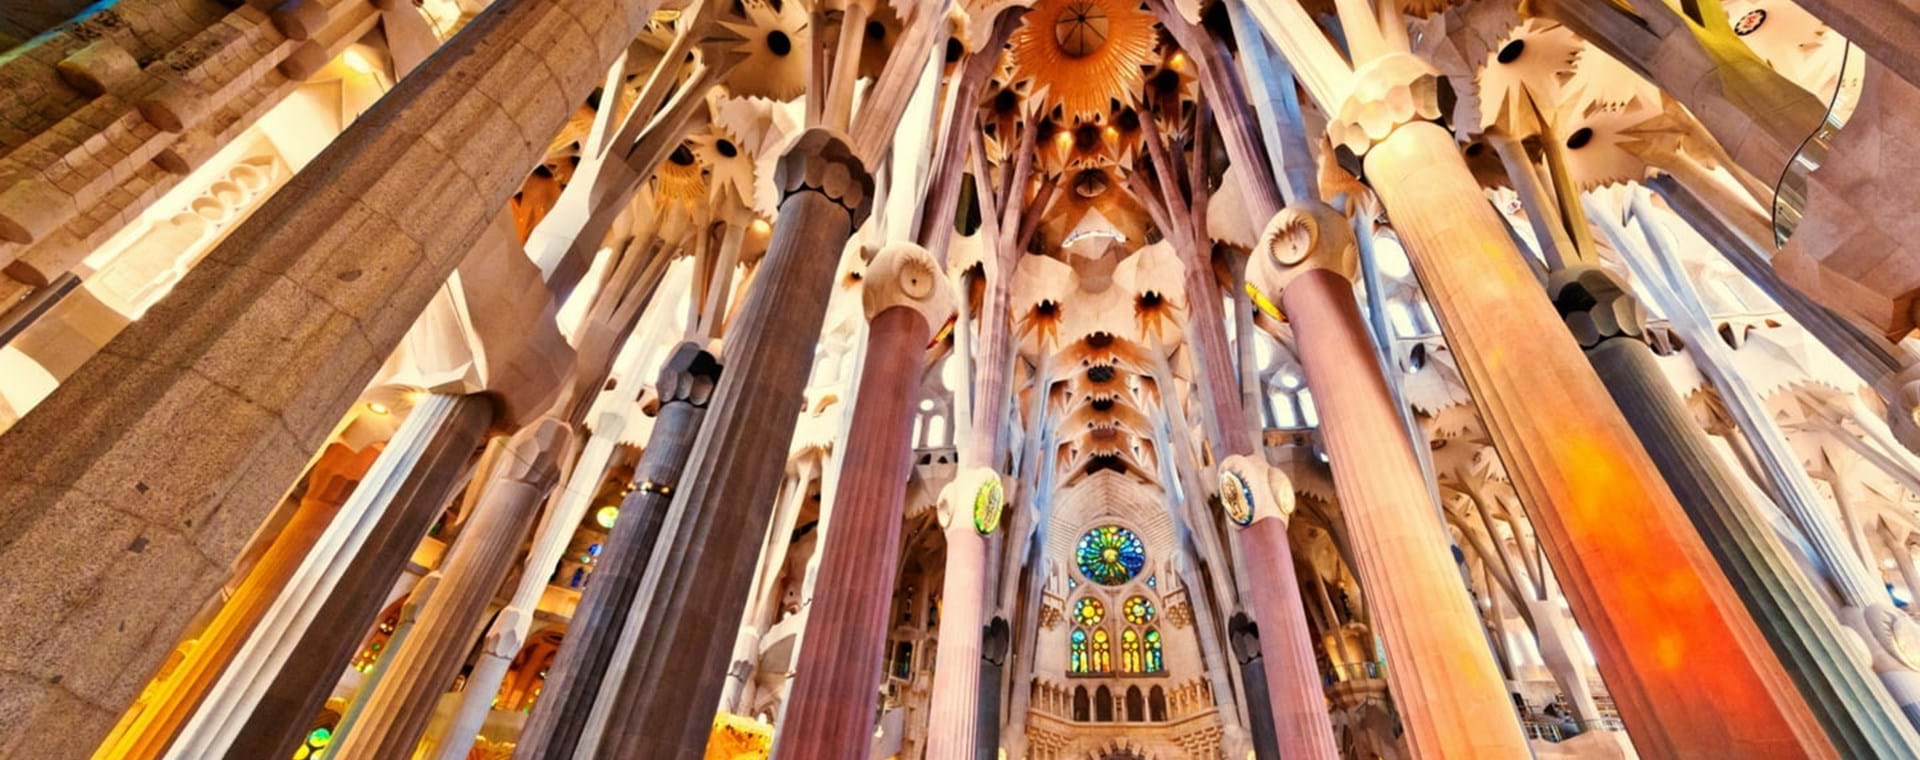 La Sagrada Familia sarà finalmente finita thumbnail